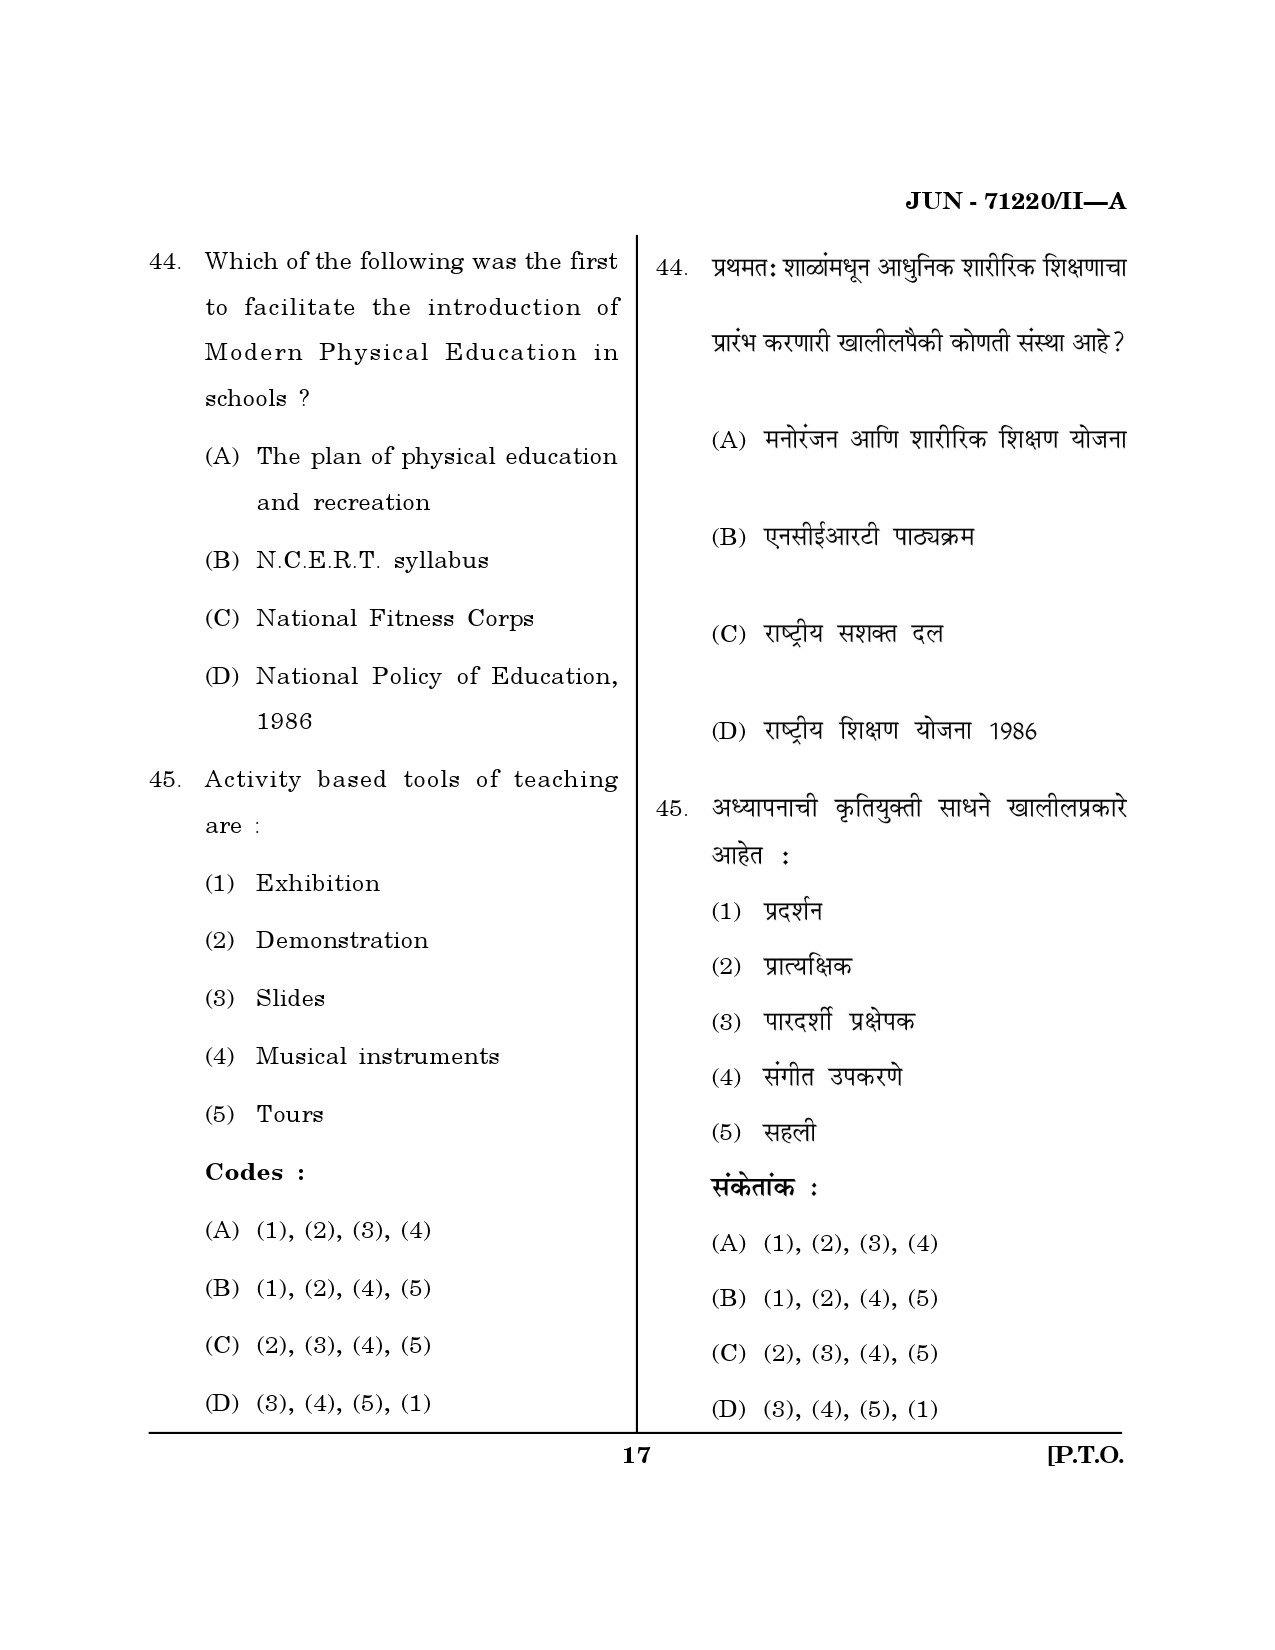 Maharashtra SET Physical Education Question Paper II June 2020 16